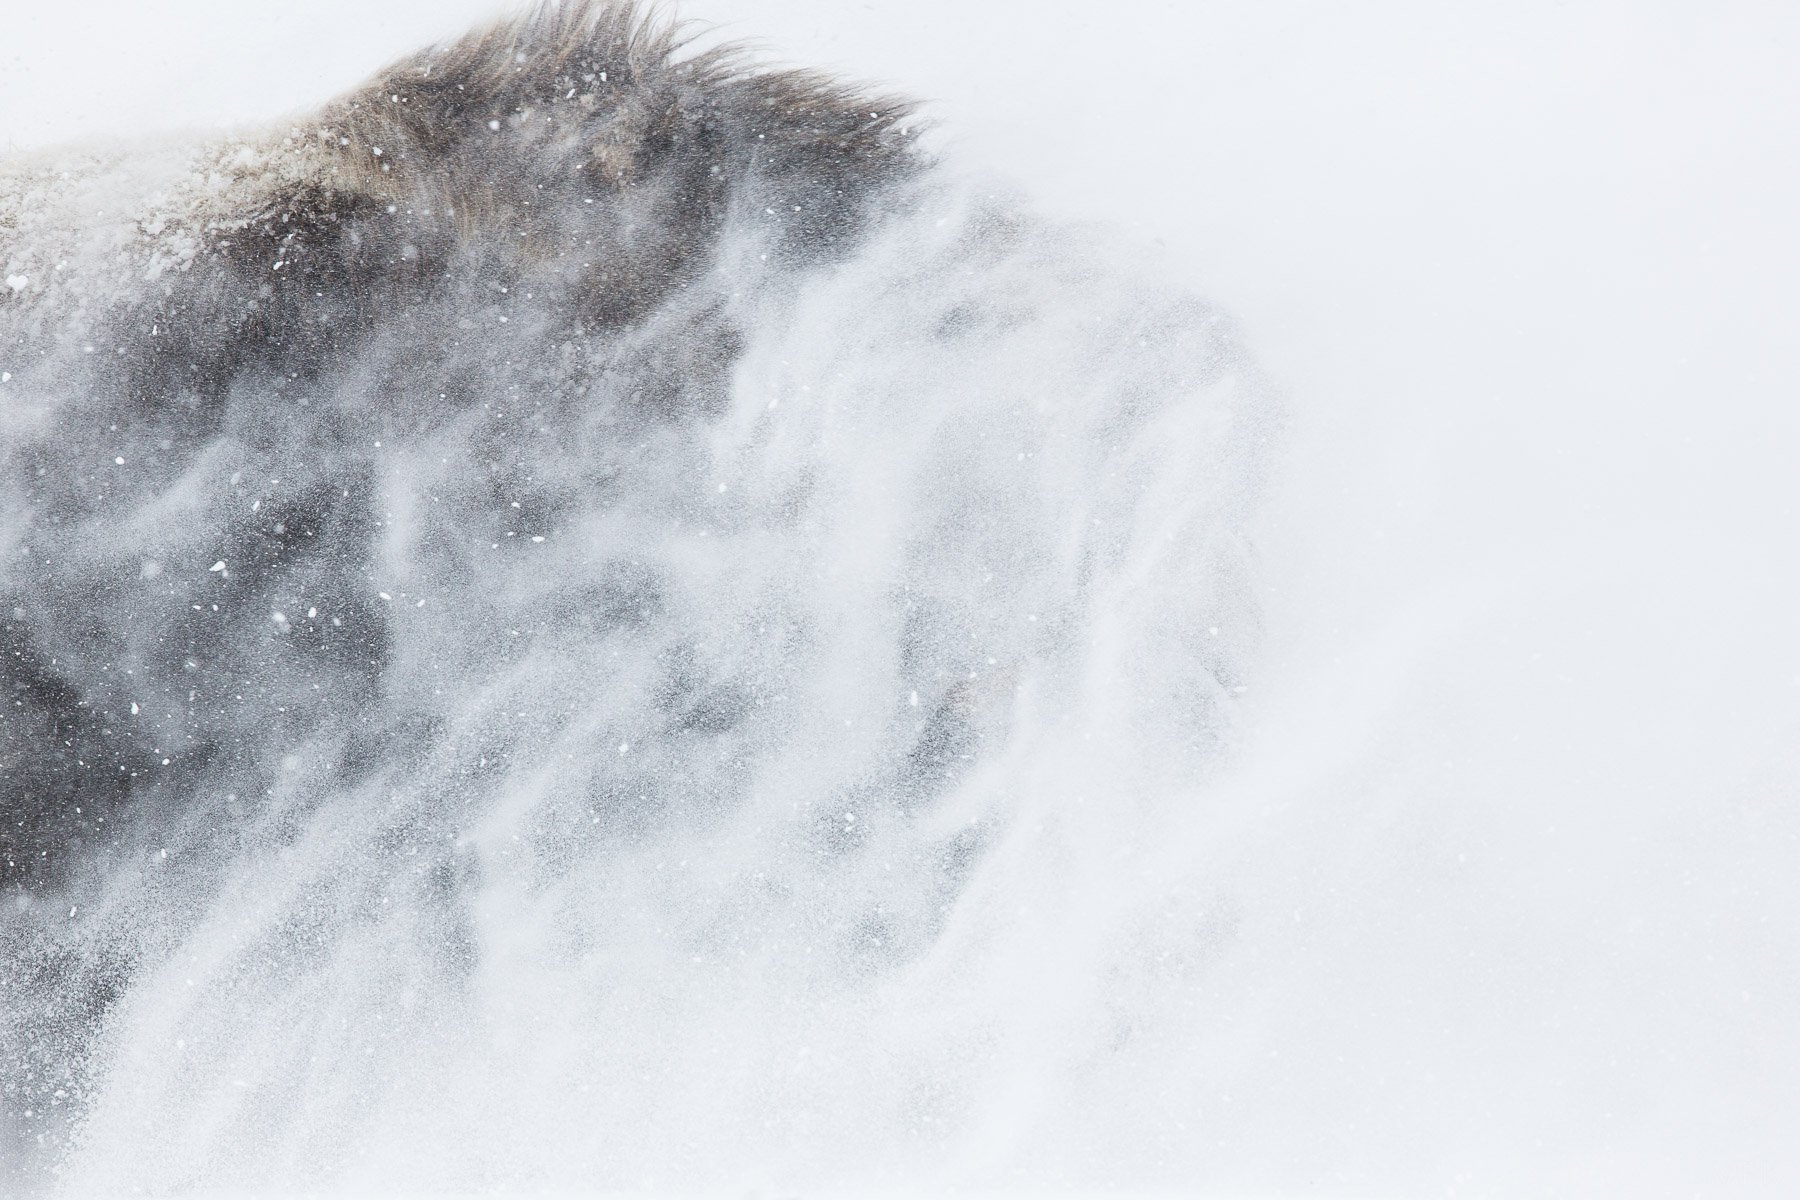 Muxk-Ox-Ice-Snow-Harsh-Nature-Survival-Winter-Matthew-Polvorosa-Kline.jpg